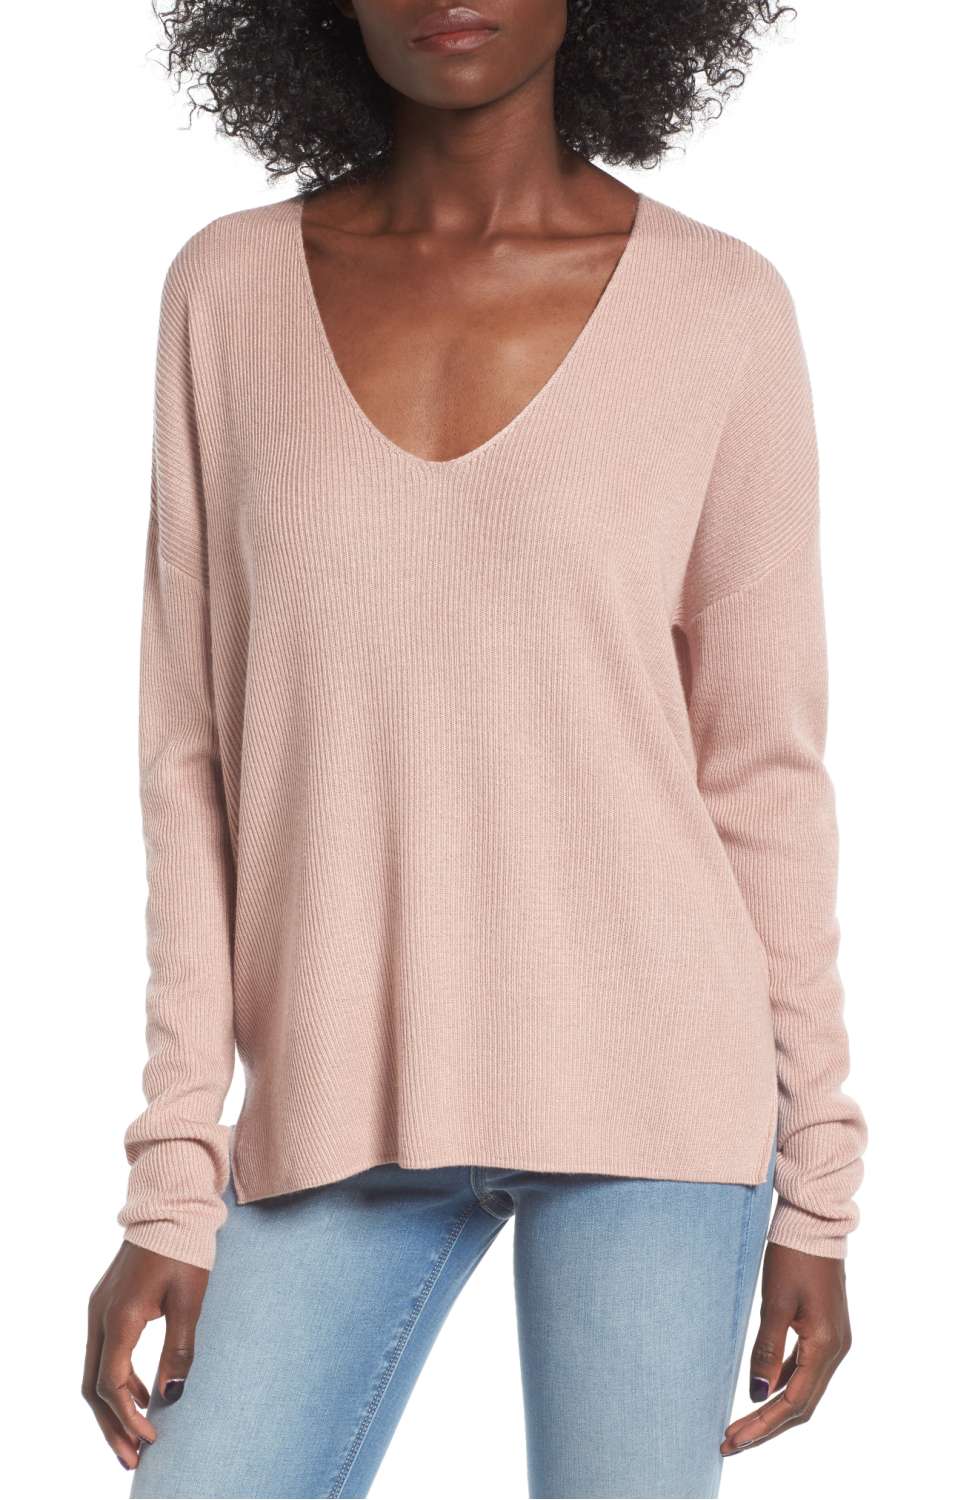 blush sweater.jpg